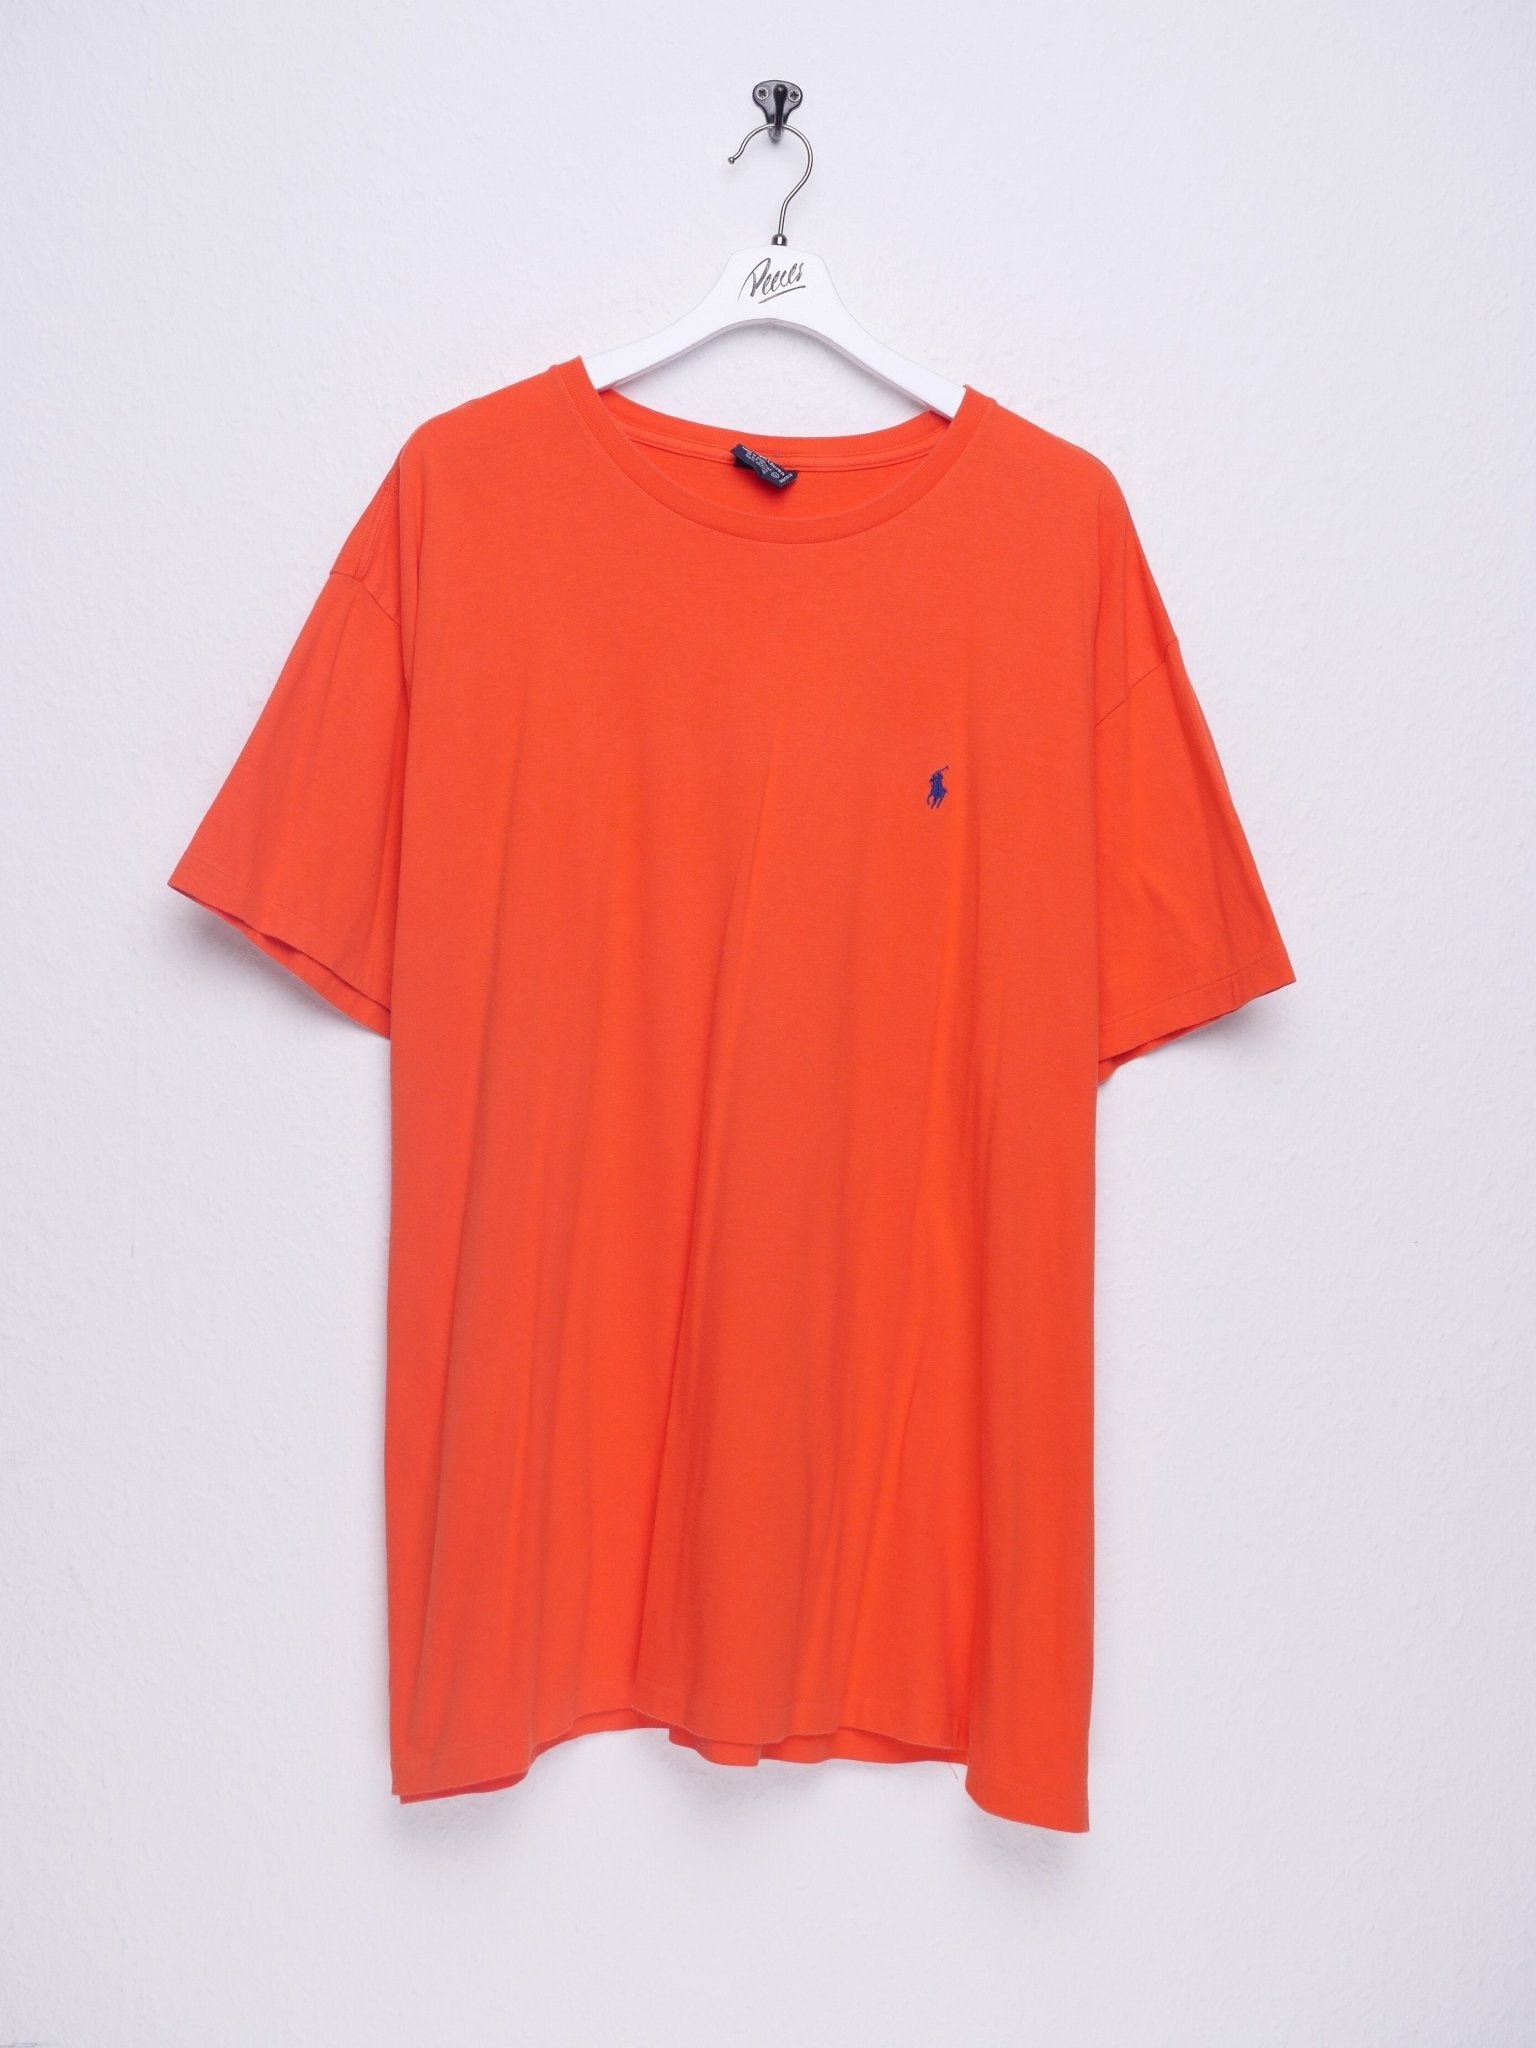 polo Ralph Lauren embroidered Logo orange Shirt - Peeces